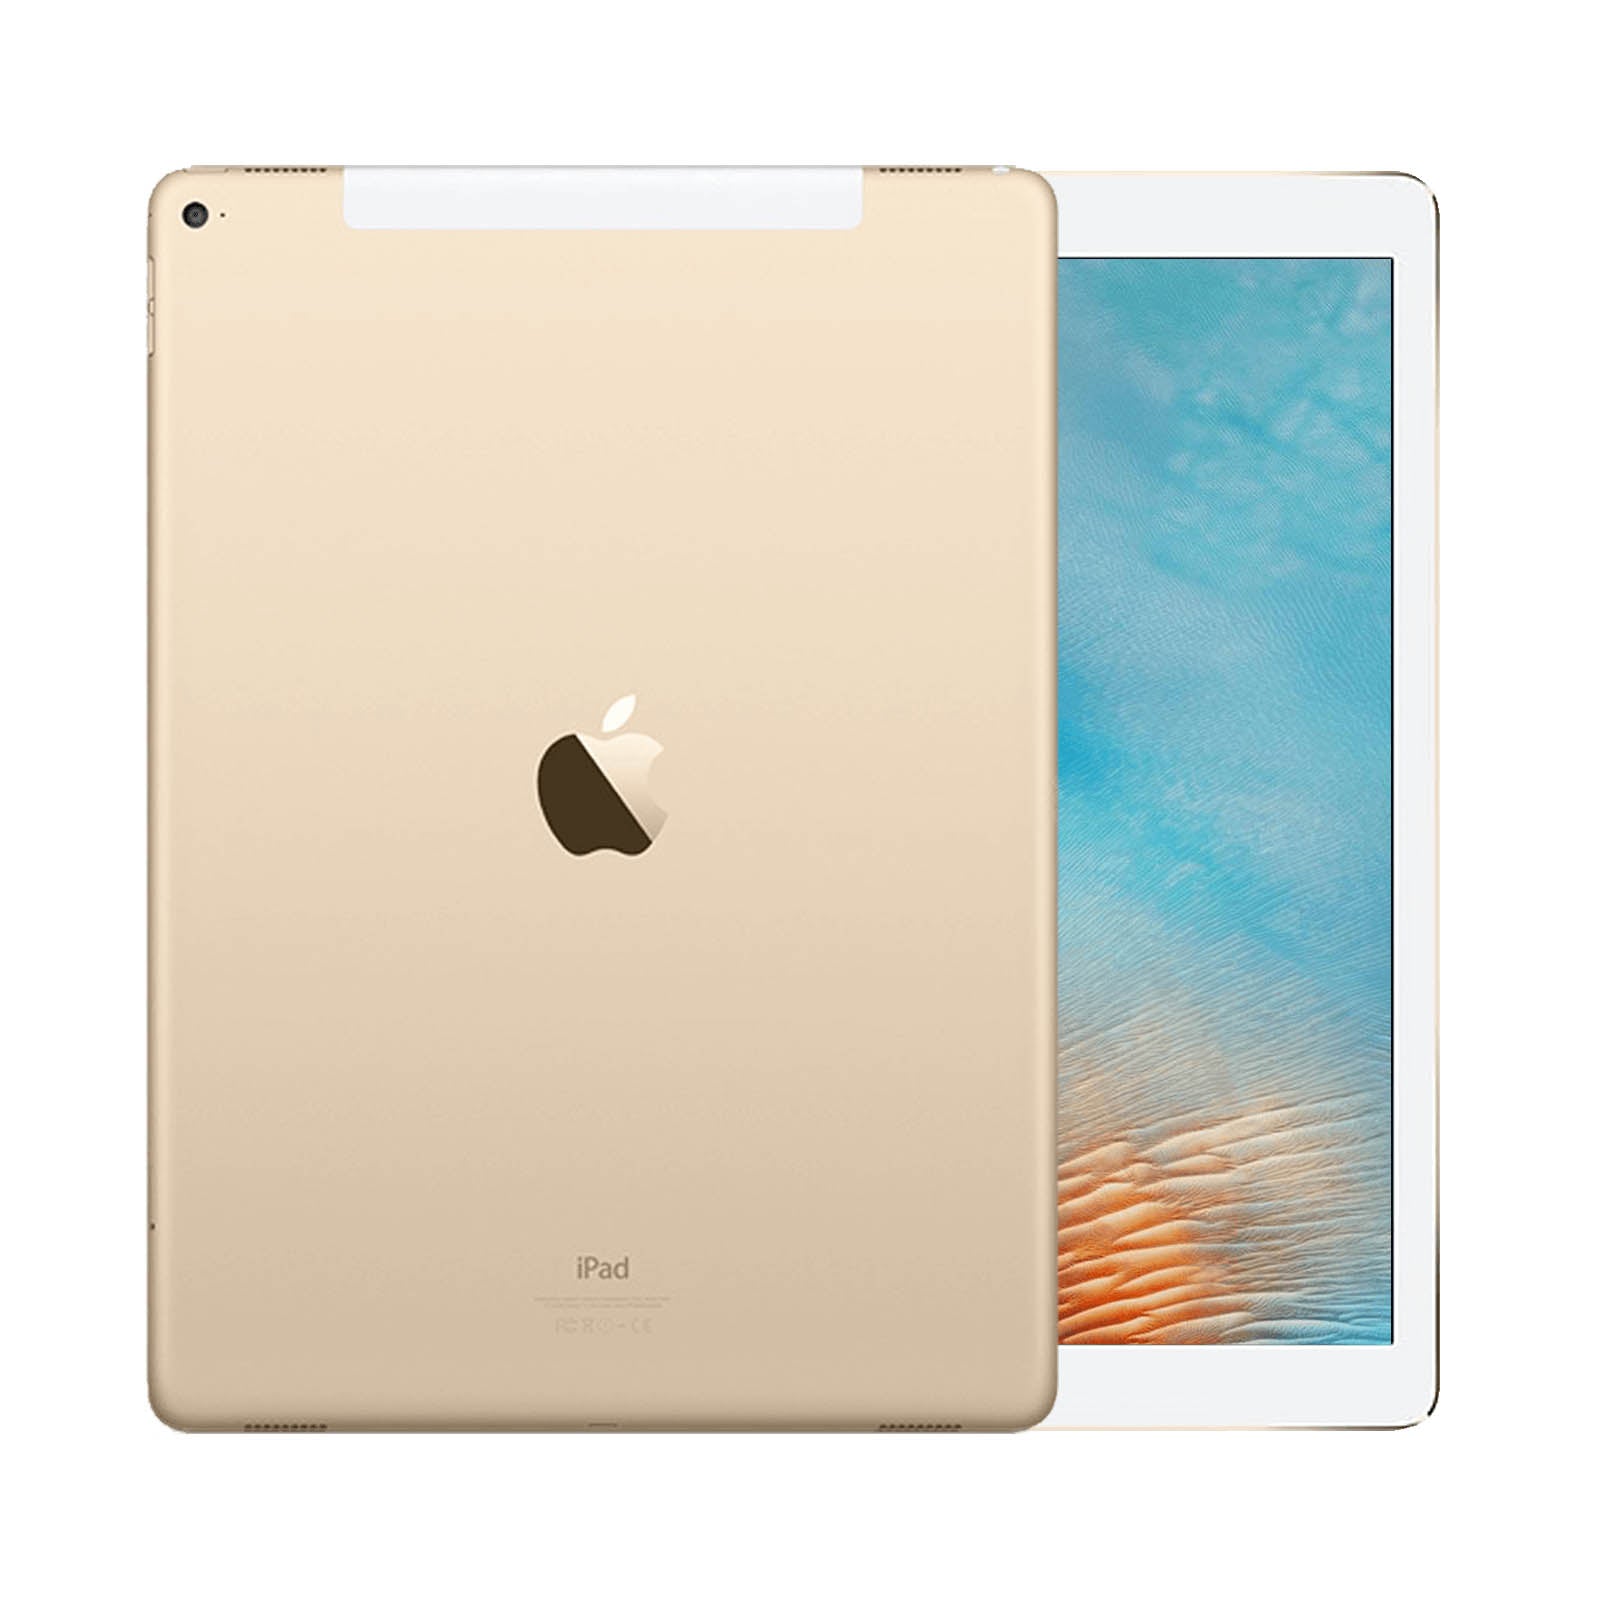 iPad Pro 12.9 Inch 128GB WiFi - Grade C Gold Gut WiFi